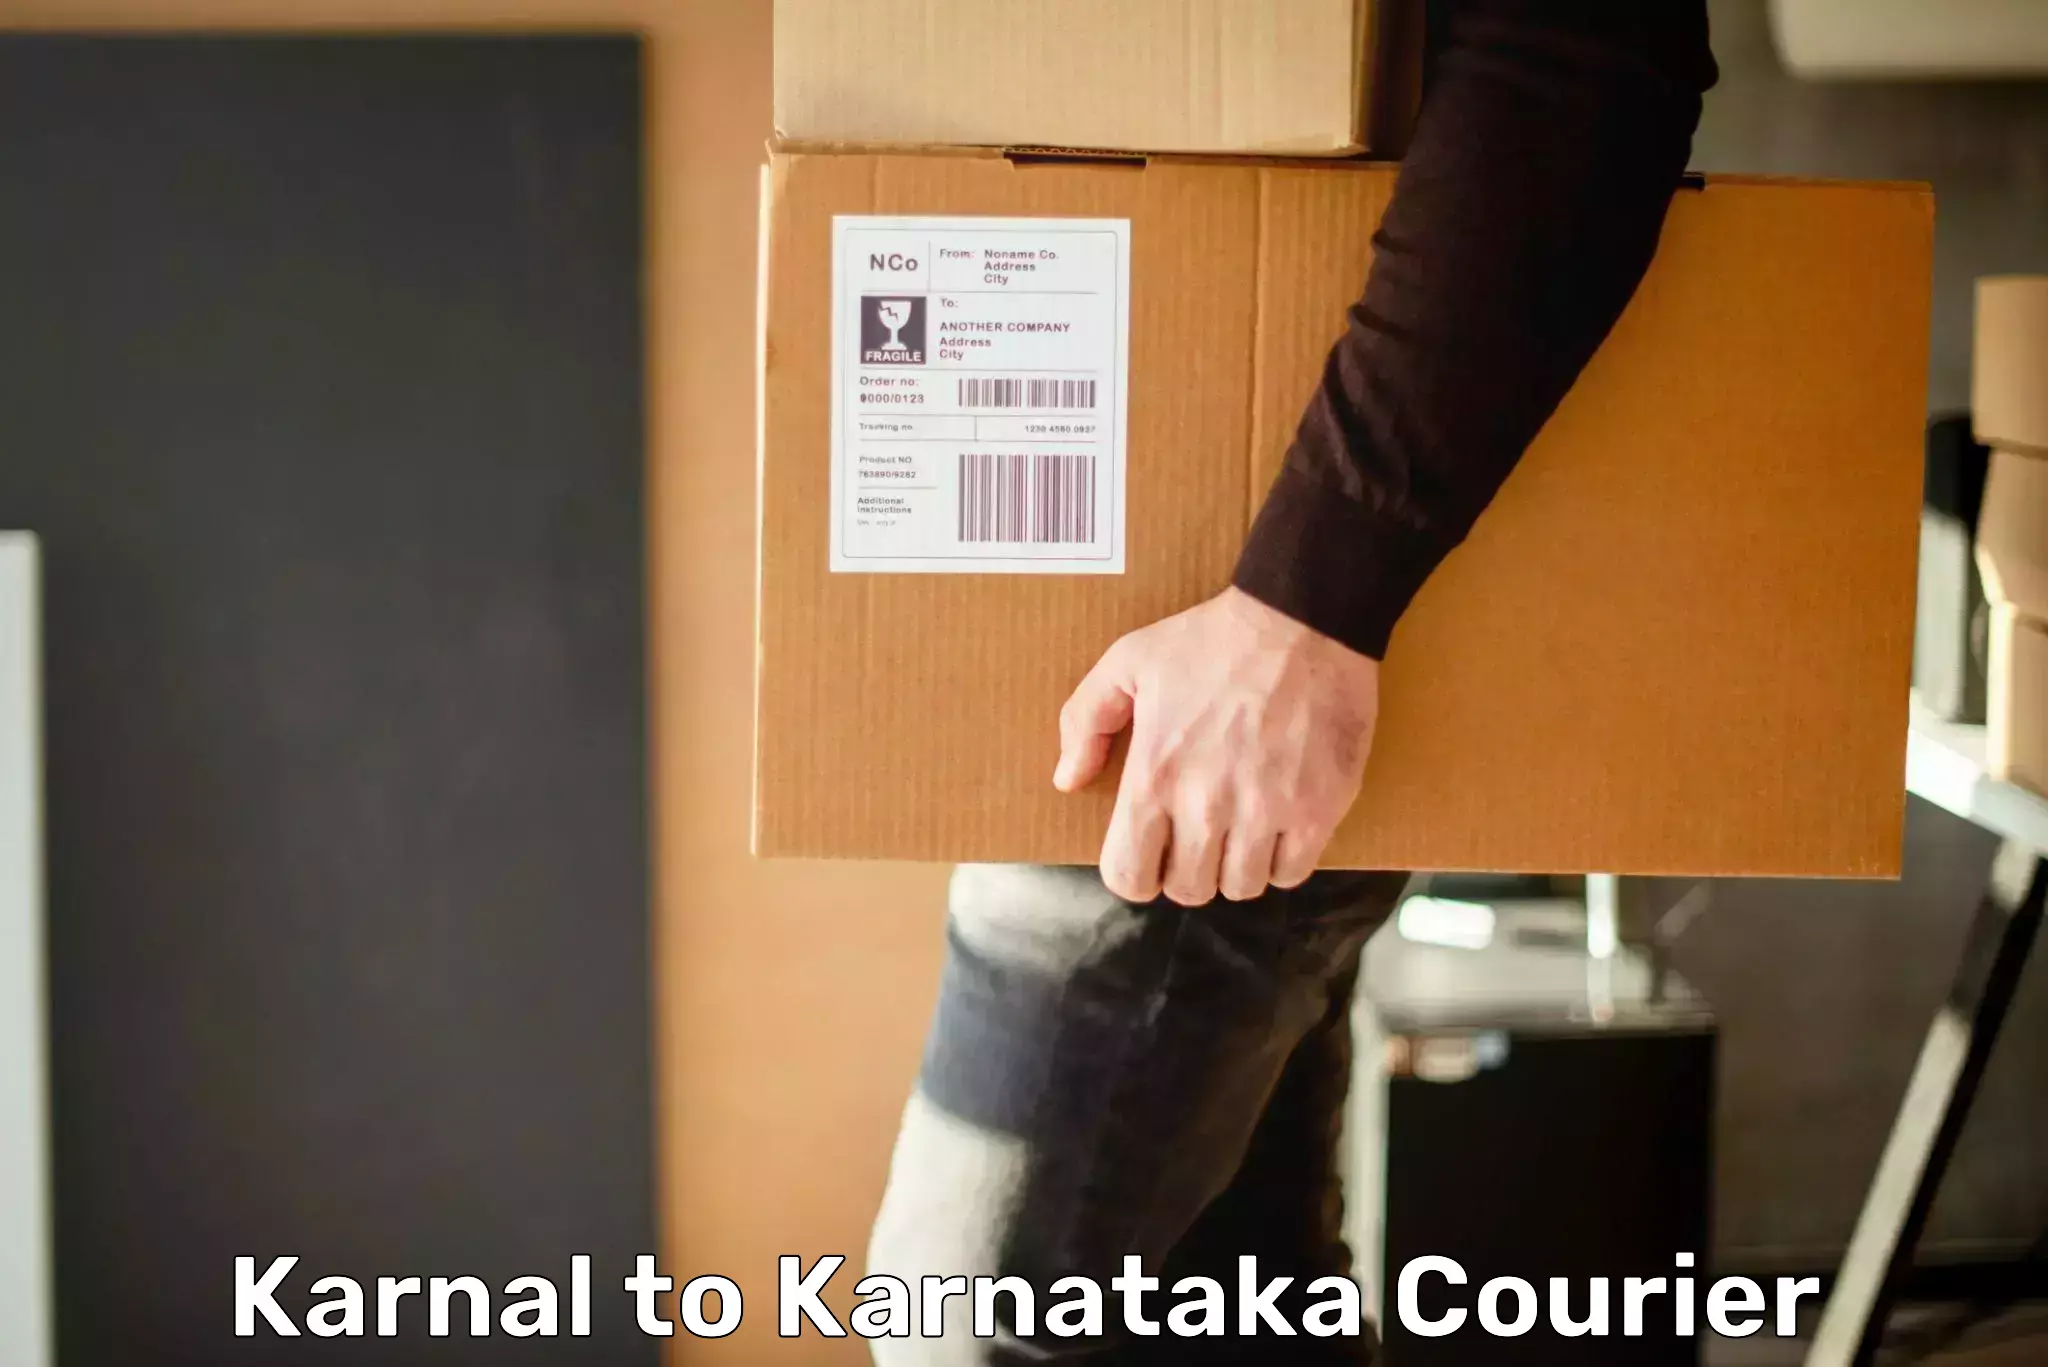 Local delivery service Karnal to Karnataka